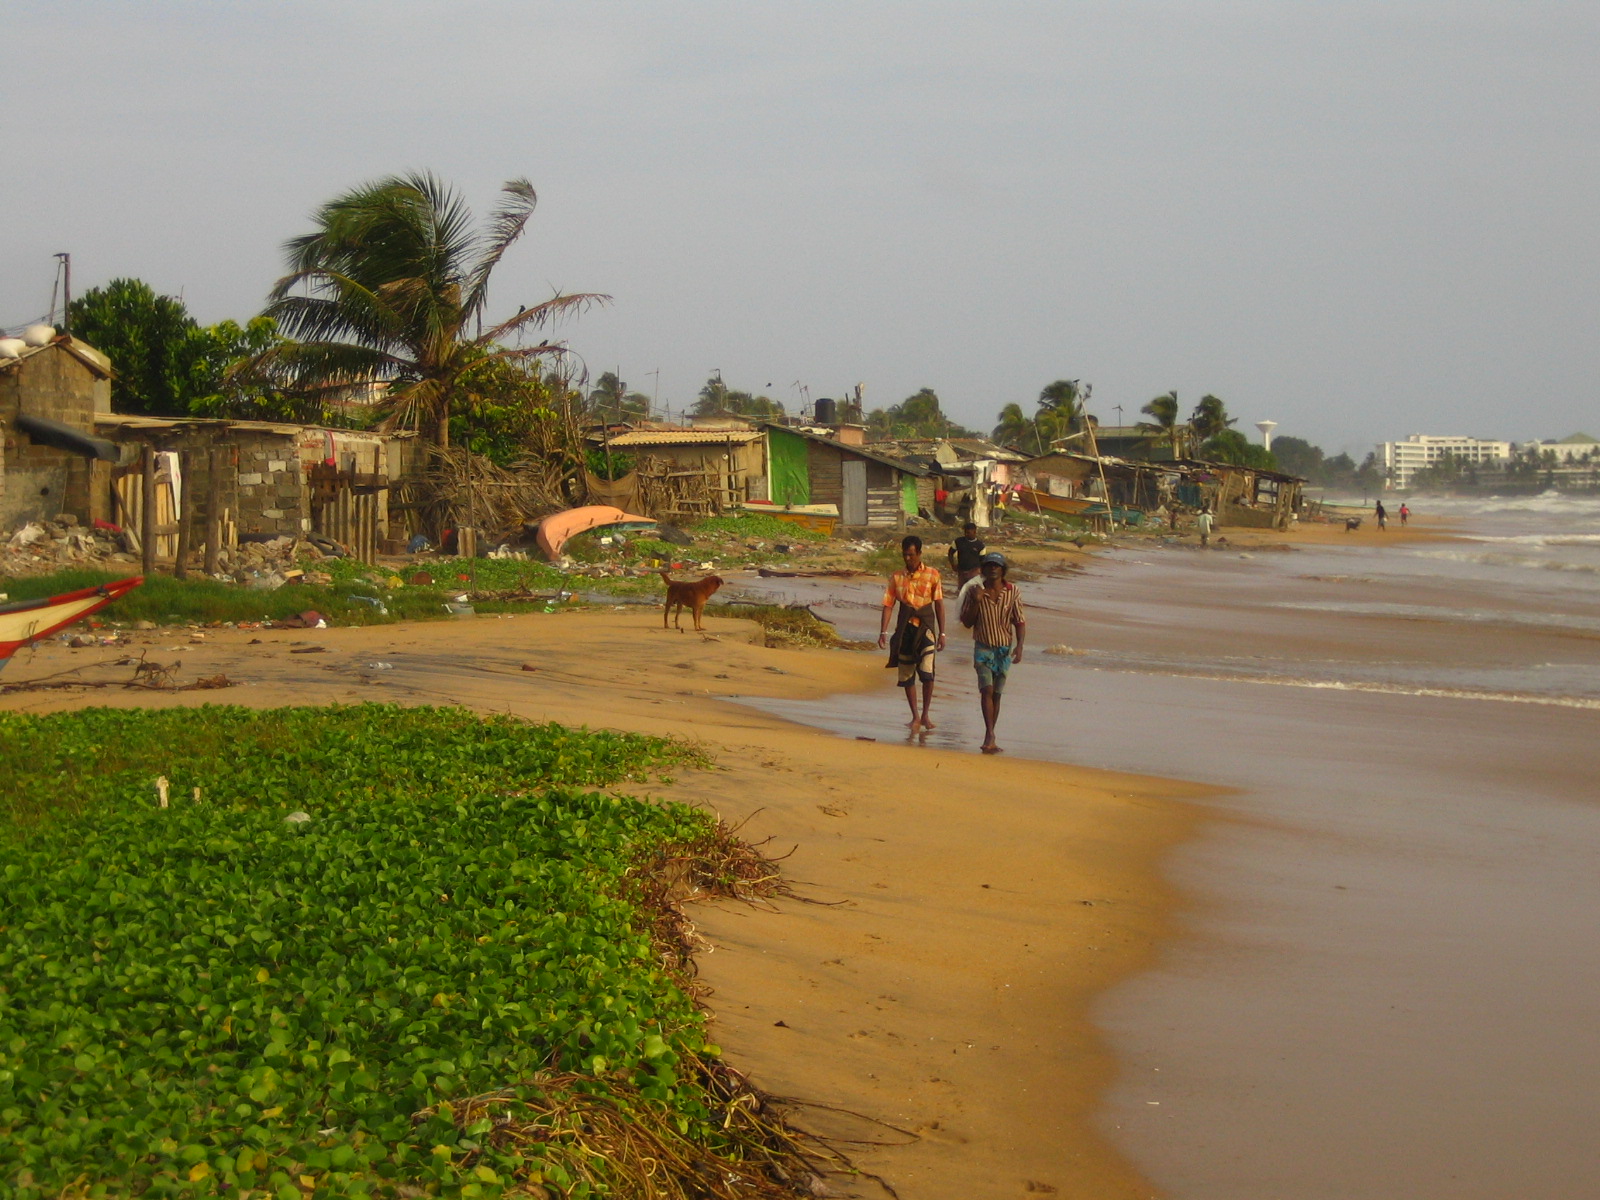 File:Beach slum - Colombo - Sri Lanka.jpg - Wikimedia Commons